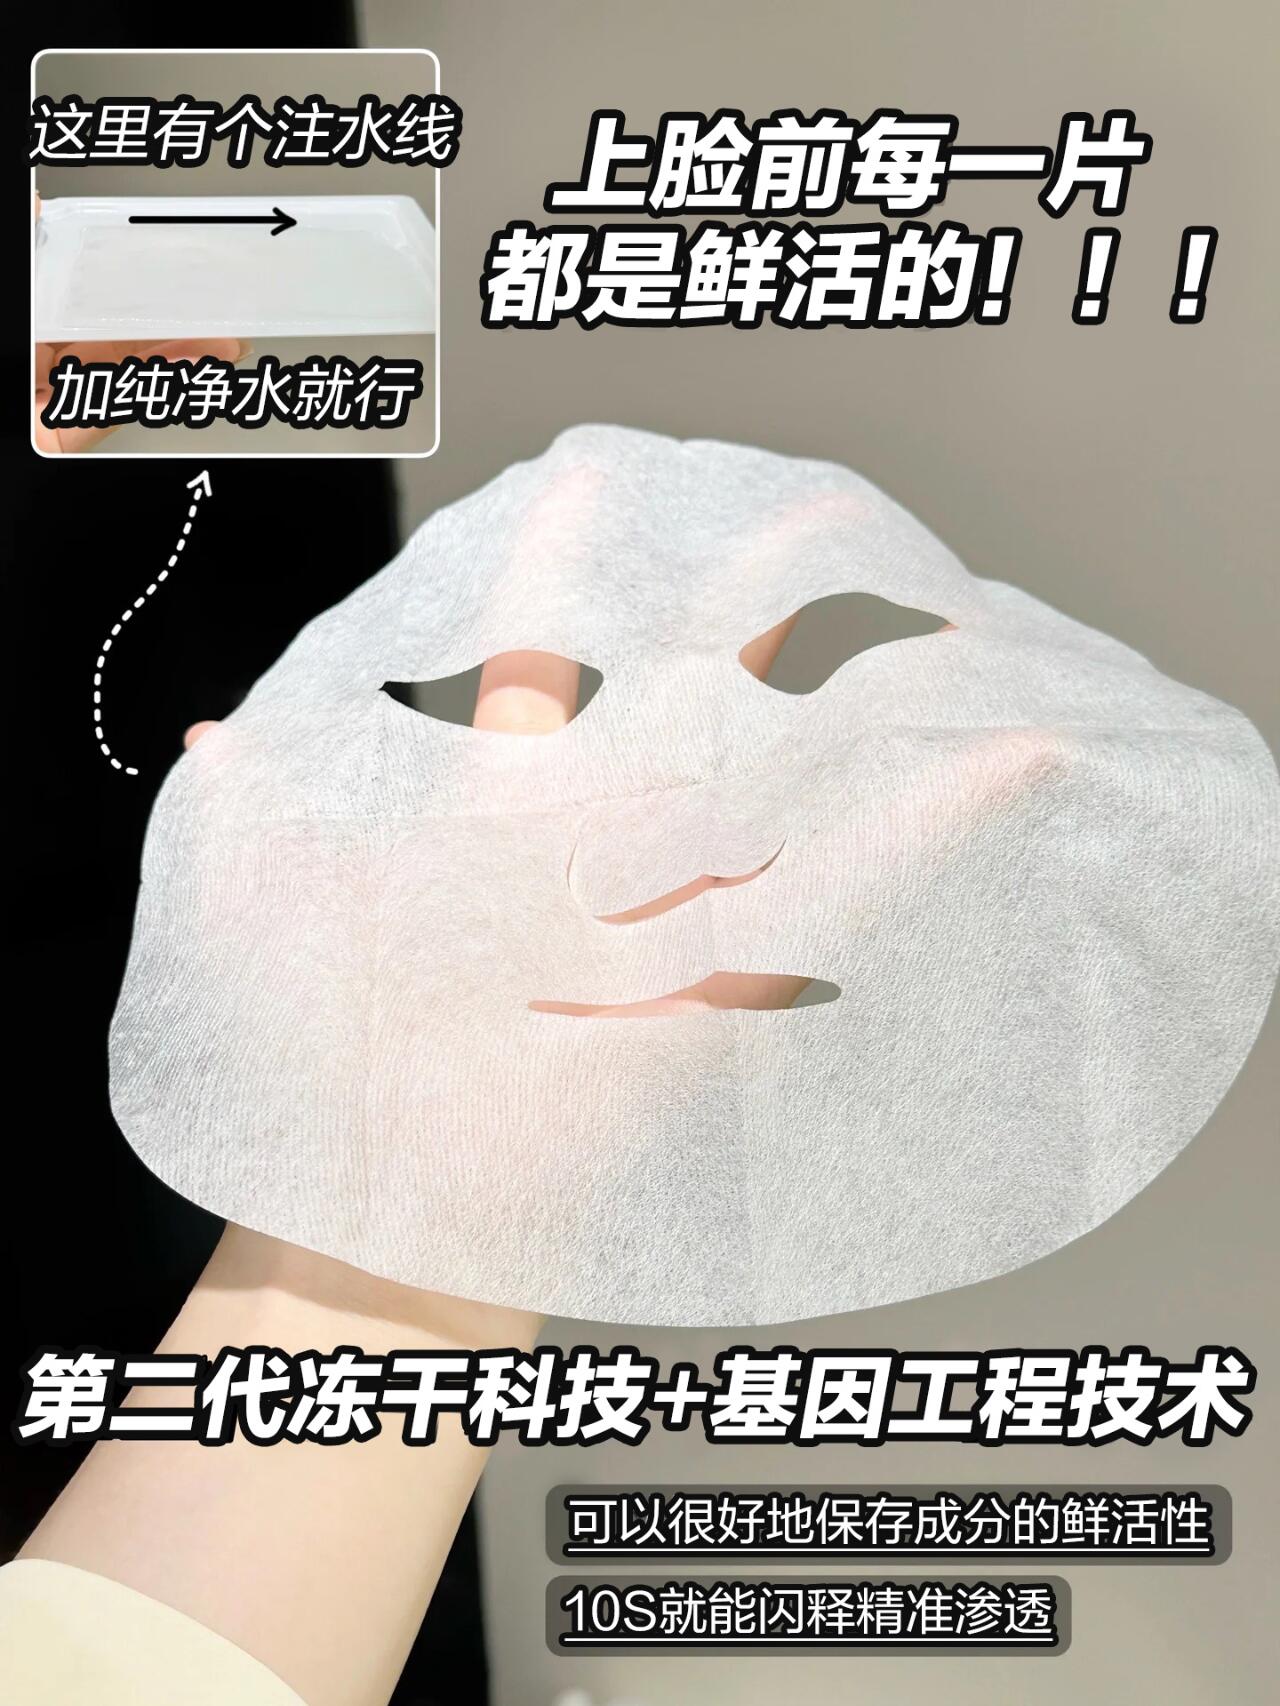 CHANDO Himalaya Collagen Efficacy Freeze Dried Mask 0.65g*5PCS 自然堂Ⅲ型重组胶原蛋白修护冻干面膜